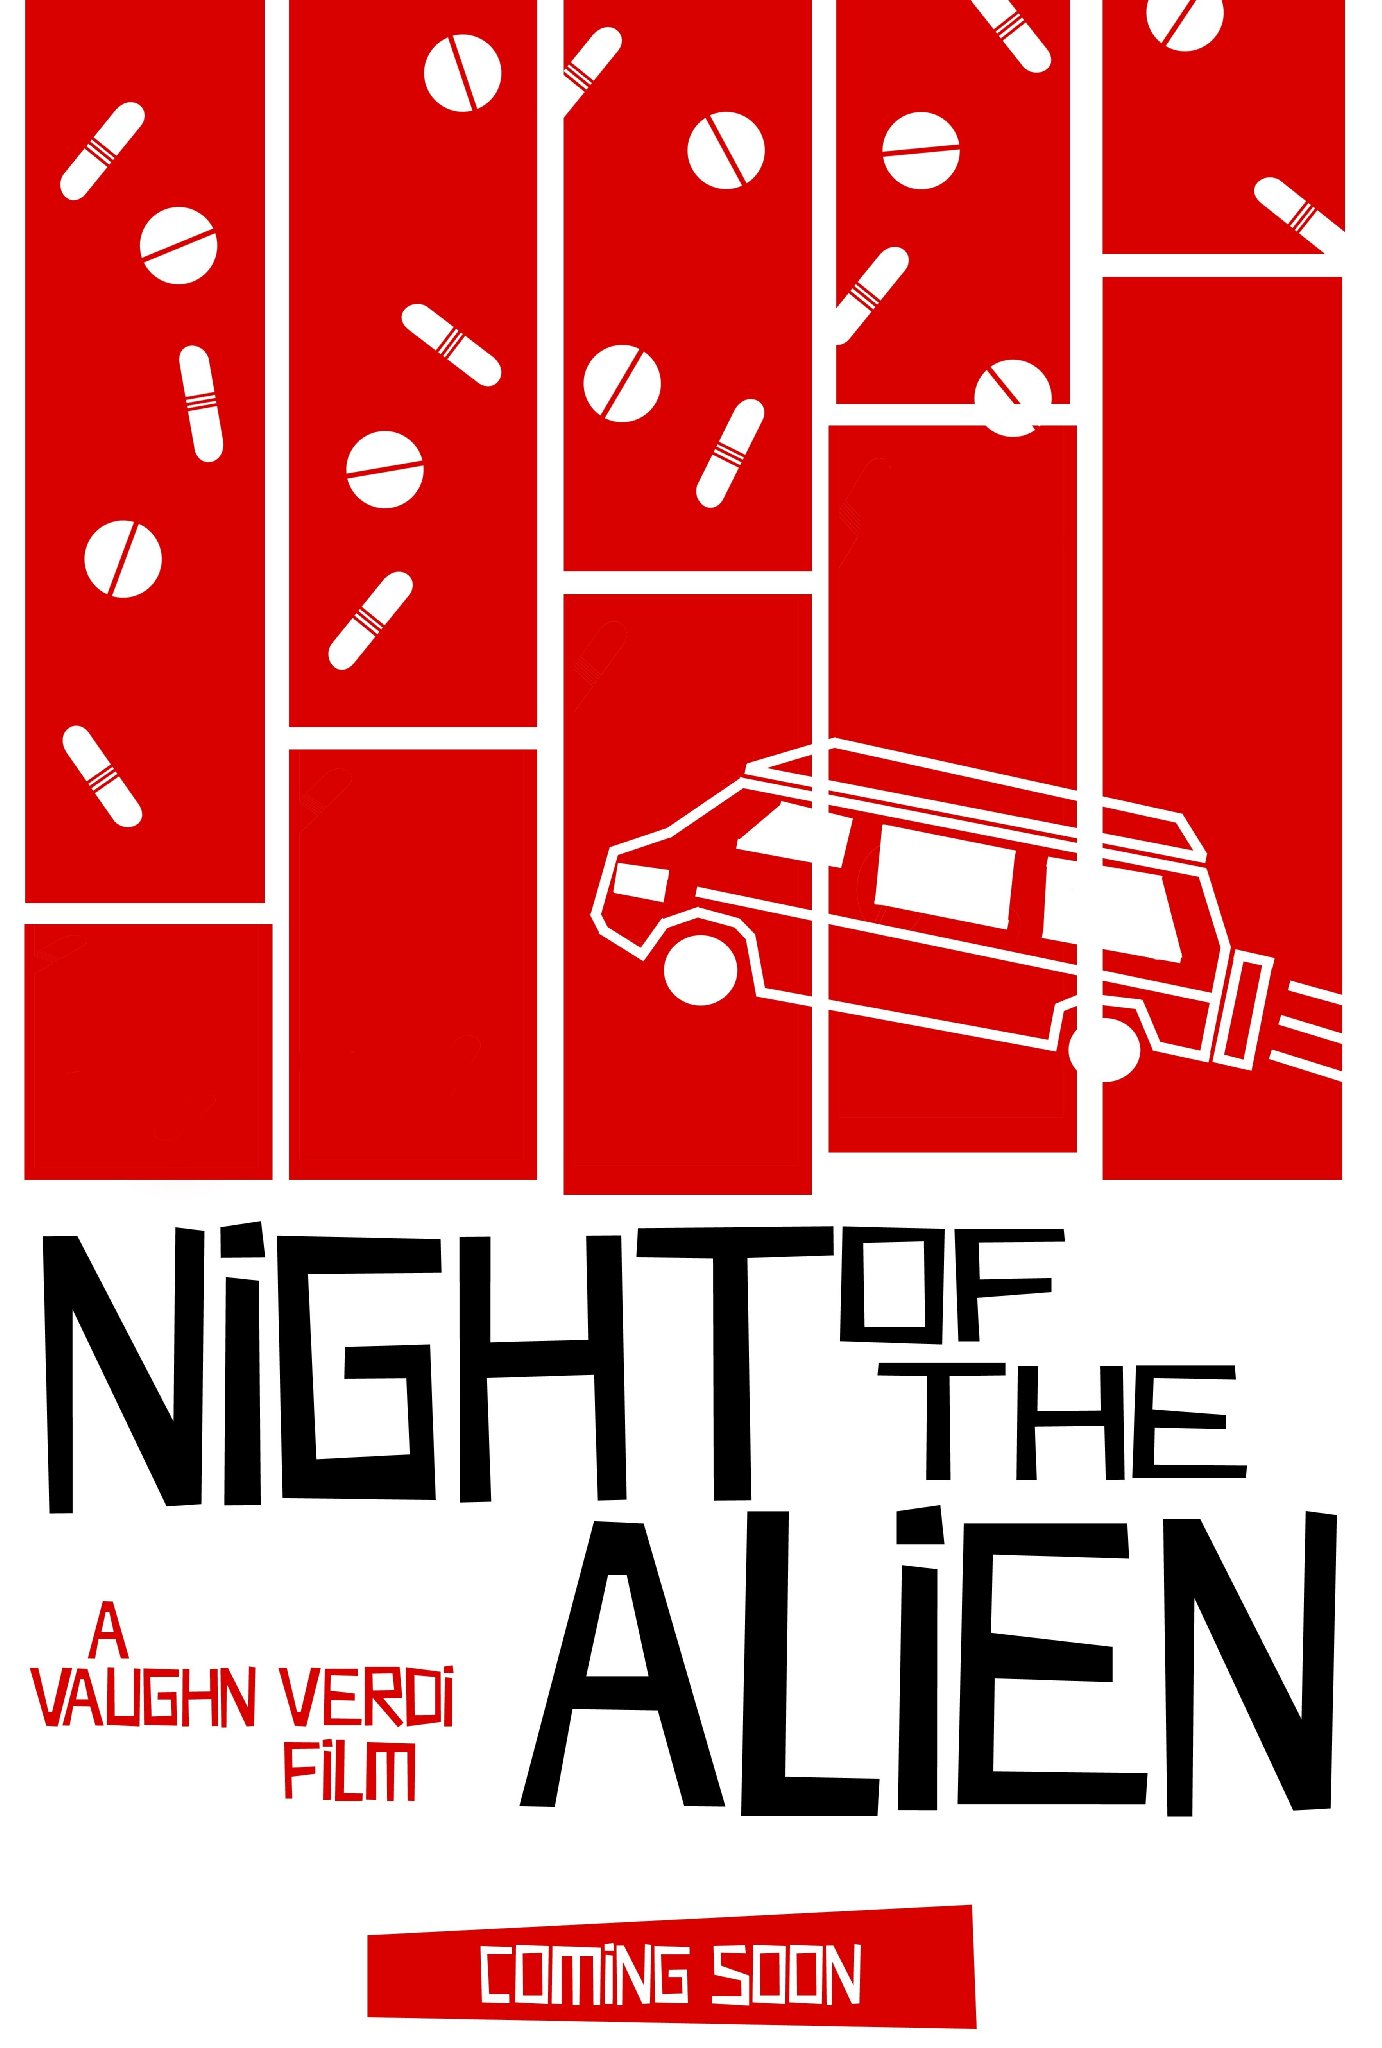 Фото - Night of the Alien: 1382x2048 / 233 Кб